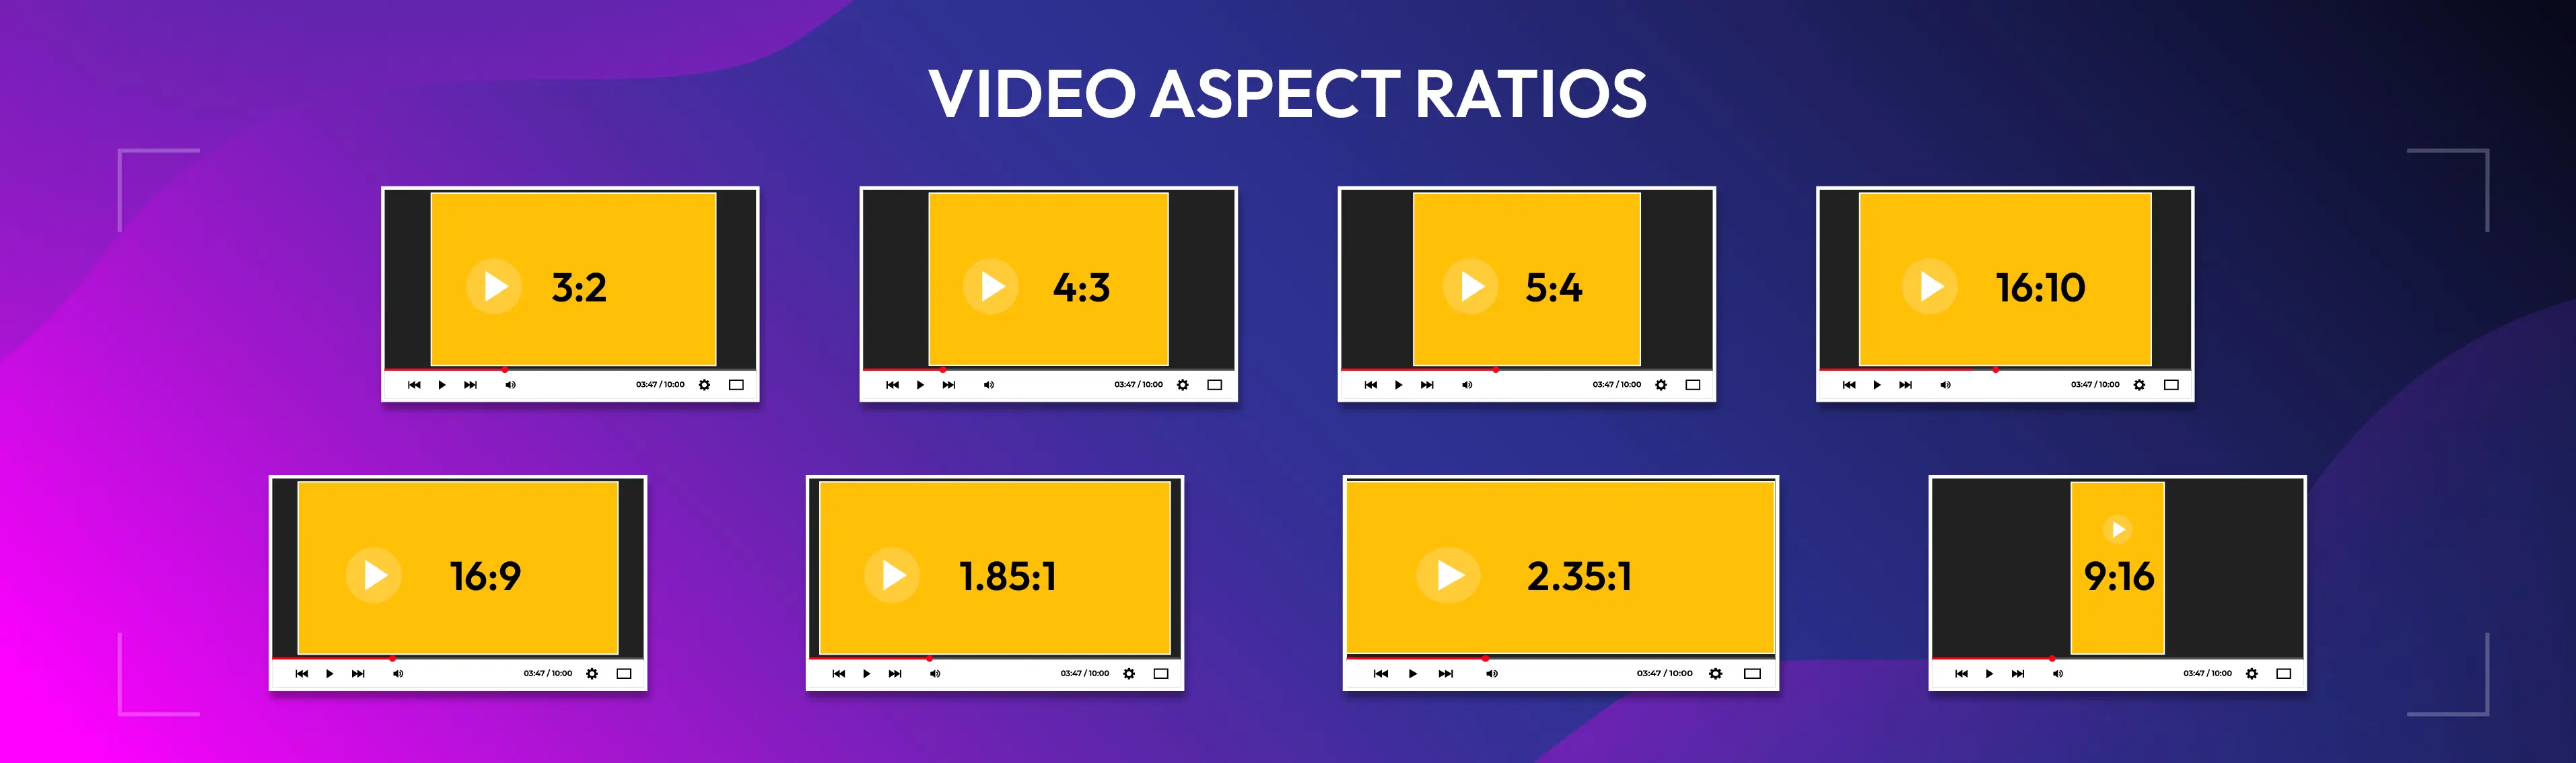 Video aspect ratio